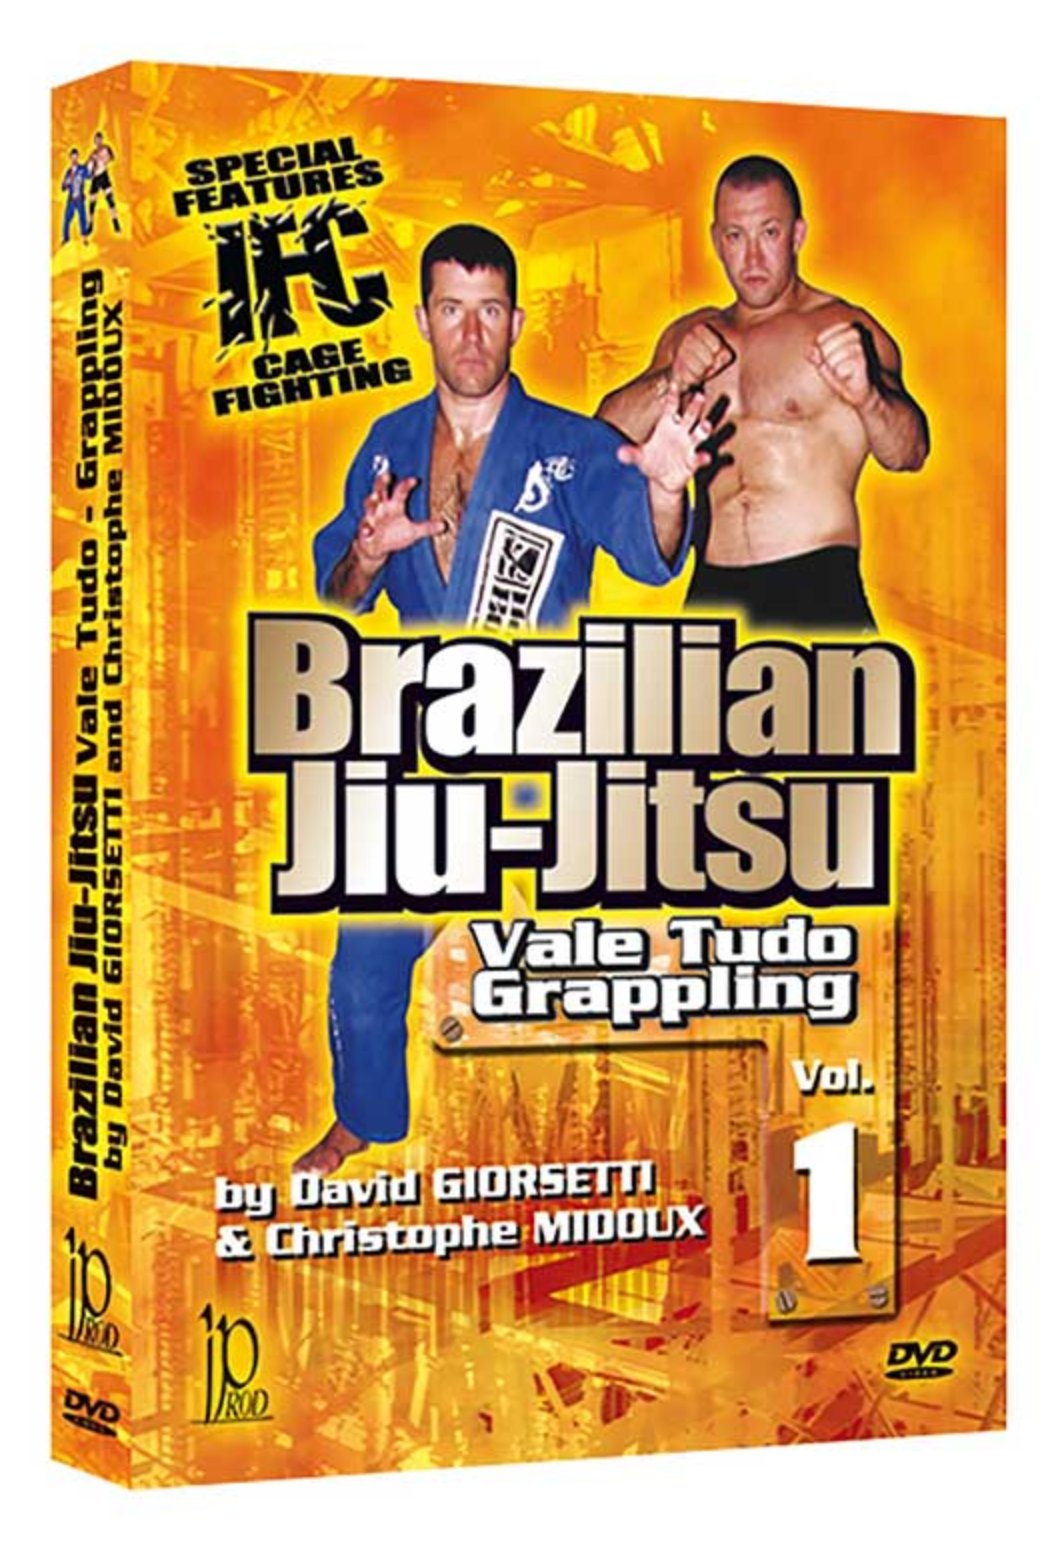 Brazilian Jiu-Jitsu Vale Tudo Grappling DVD 1 by David Giorsetti & Christophe Midoux